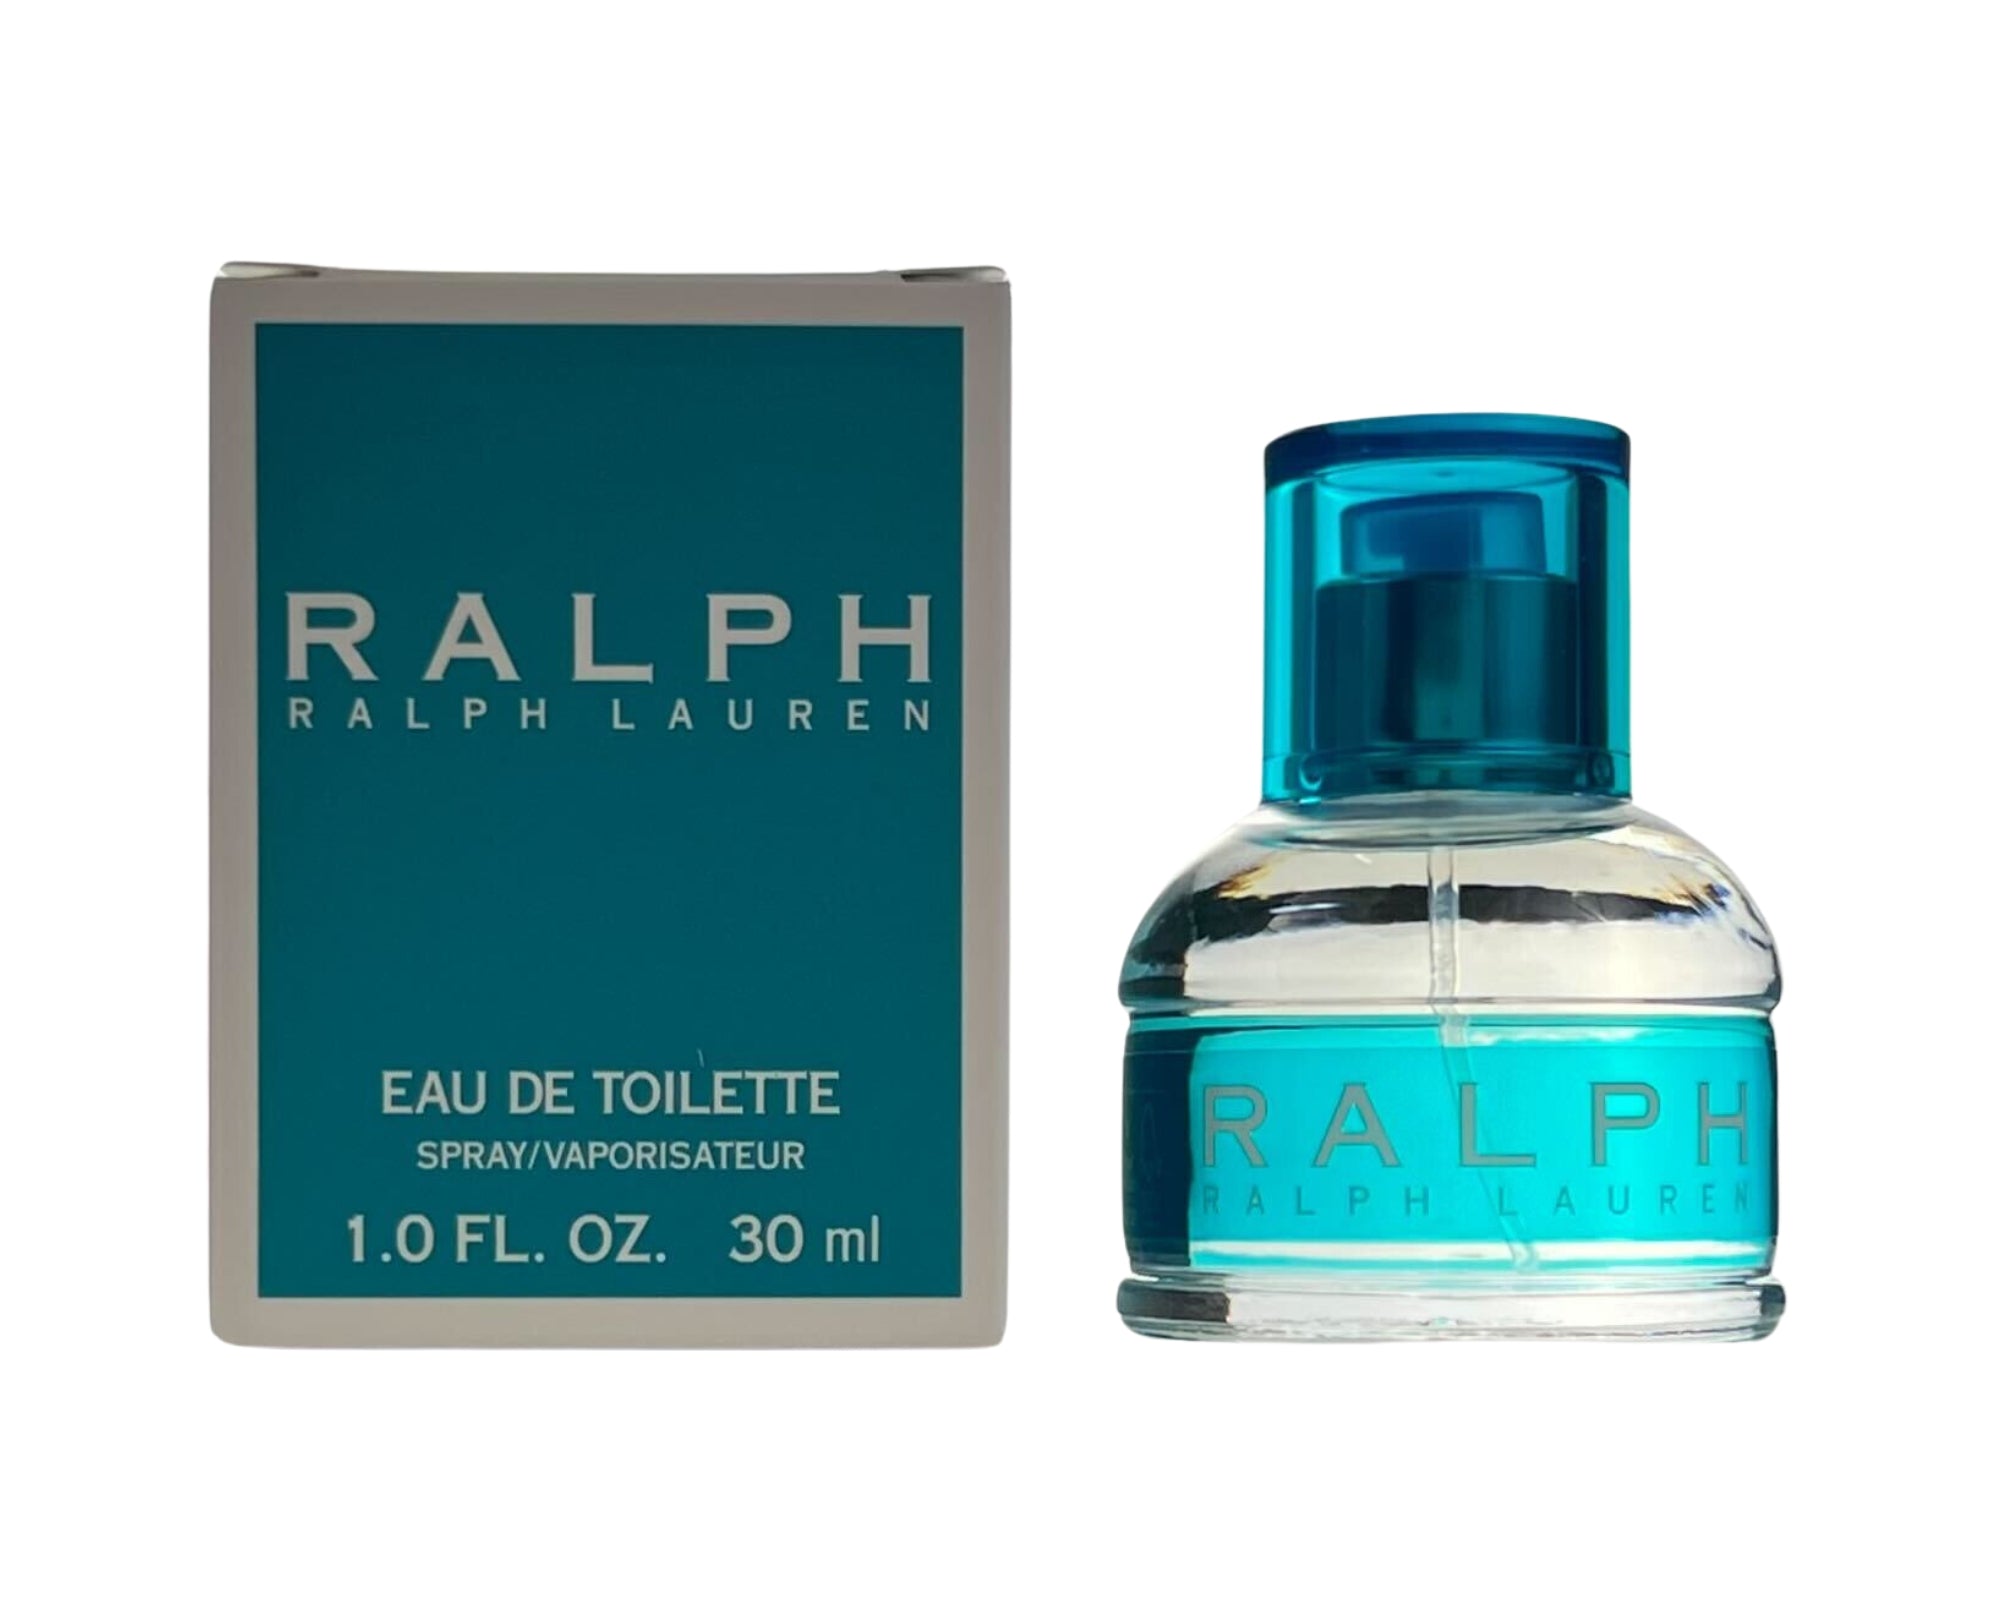 Lauren Perfume Eau De Toilette by RALPH LAUREN